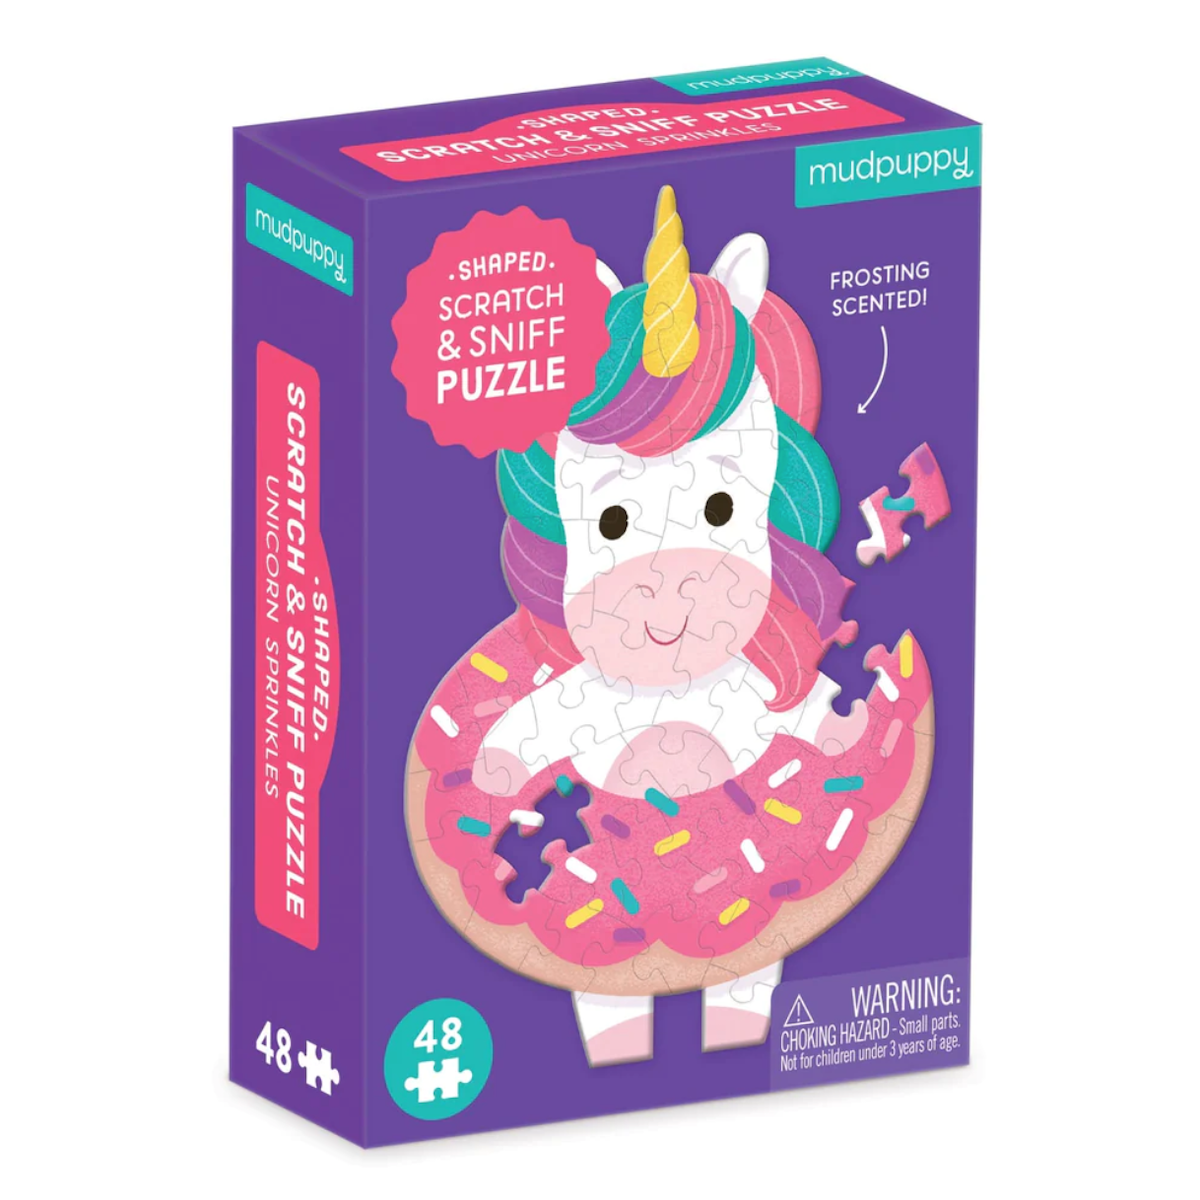 Unicorn Sprinkles Scented Mudpuppy Puzzle 48pcs